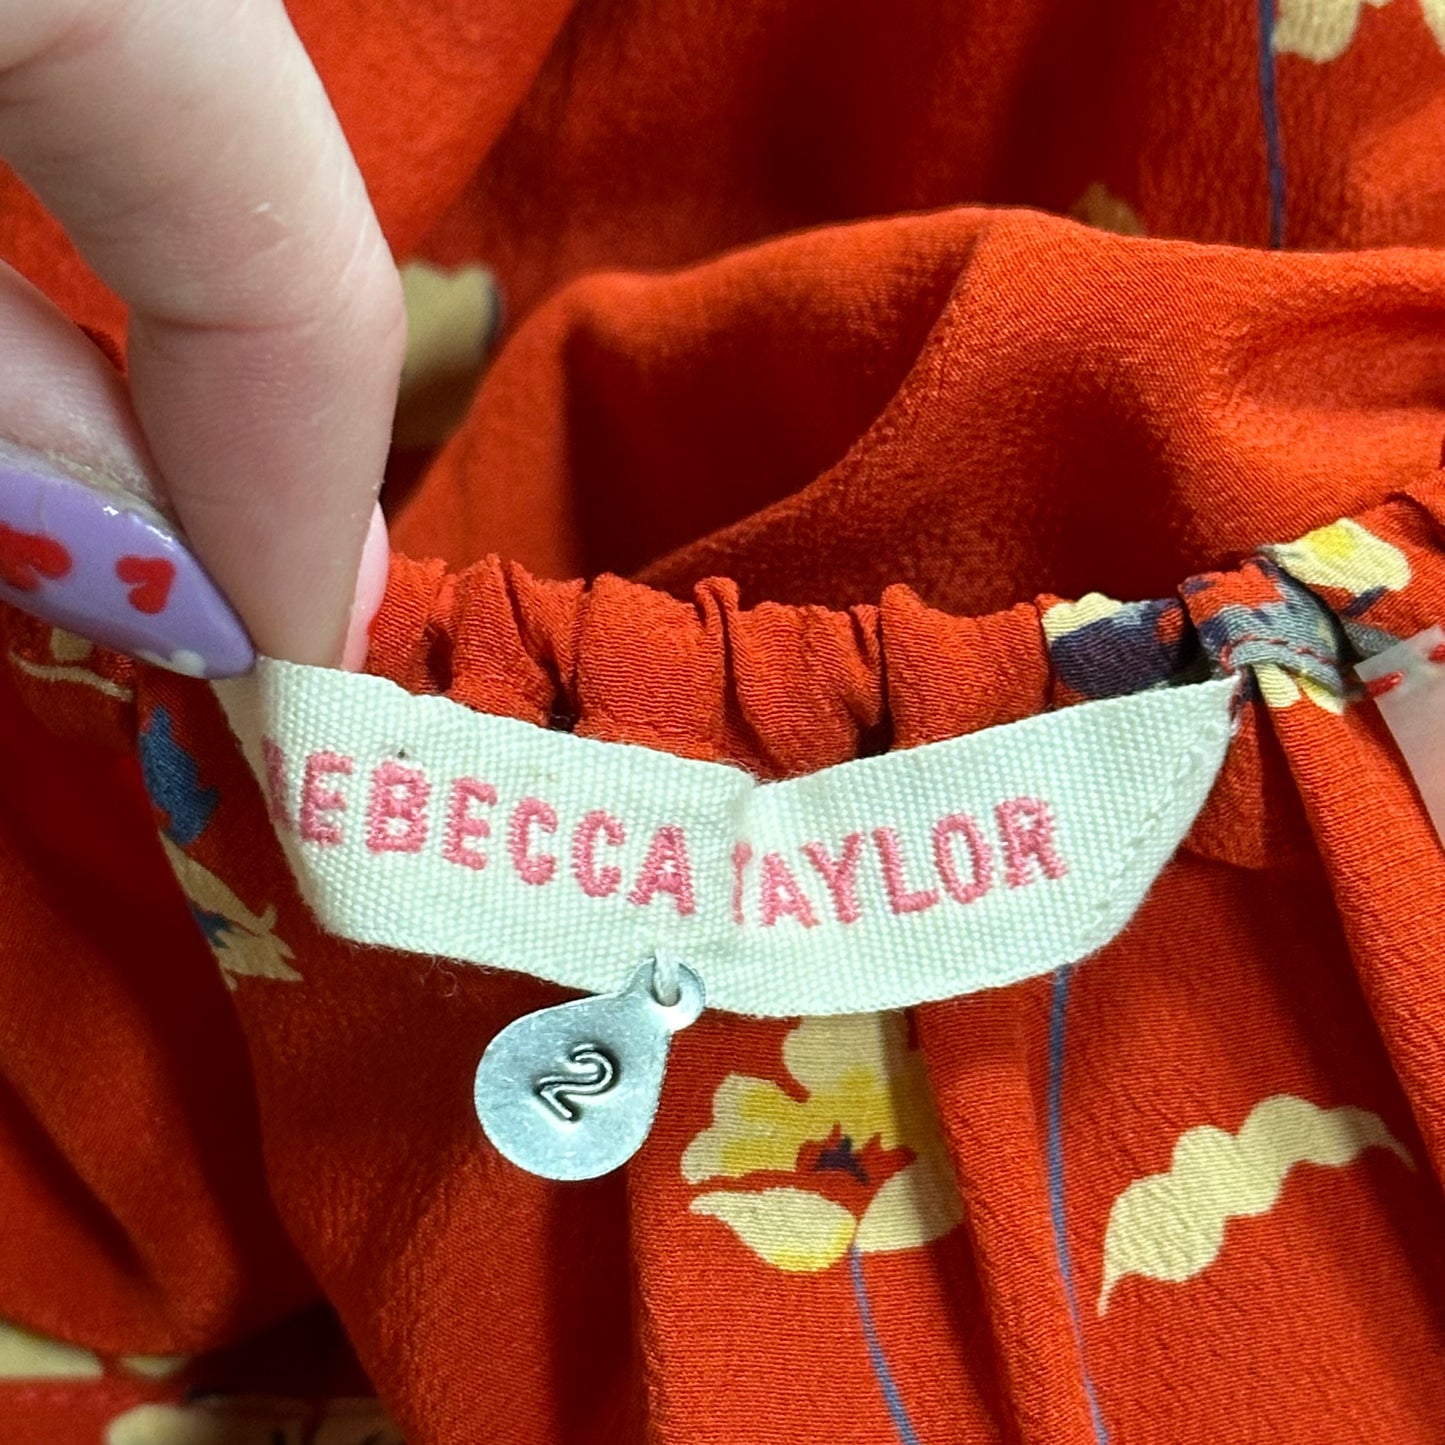 Dress Casual Midi By Rebecca Taylor  Size: Xs